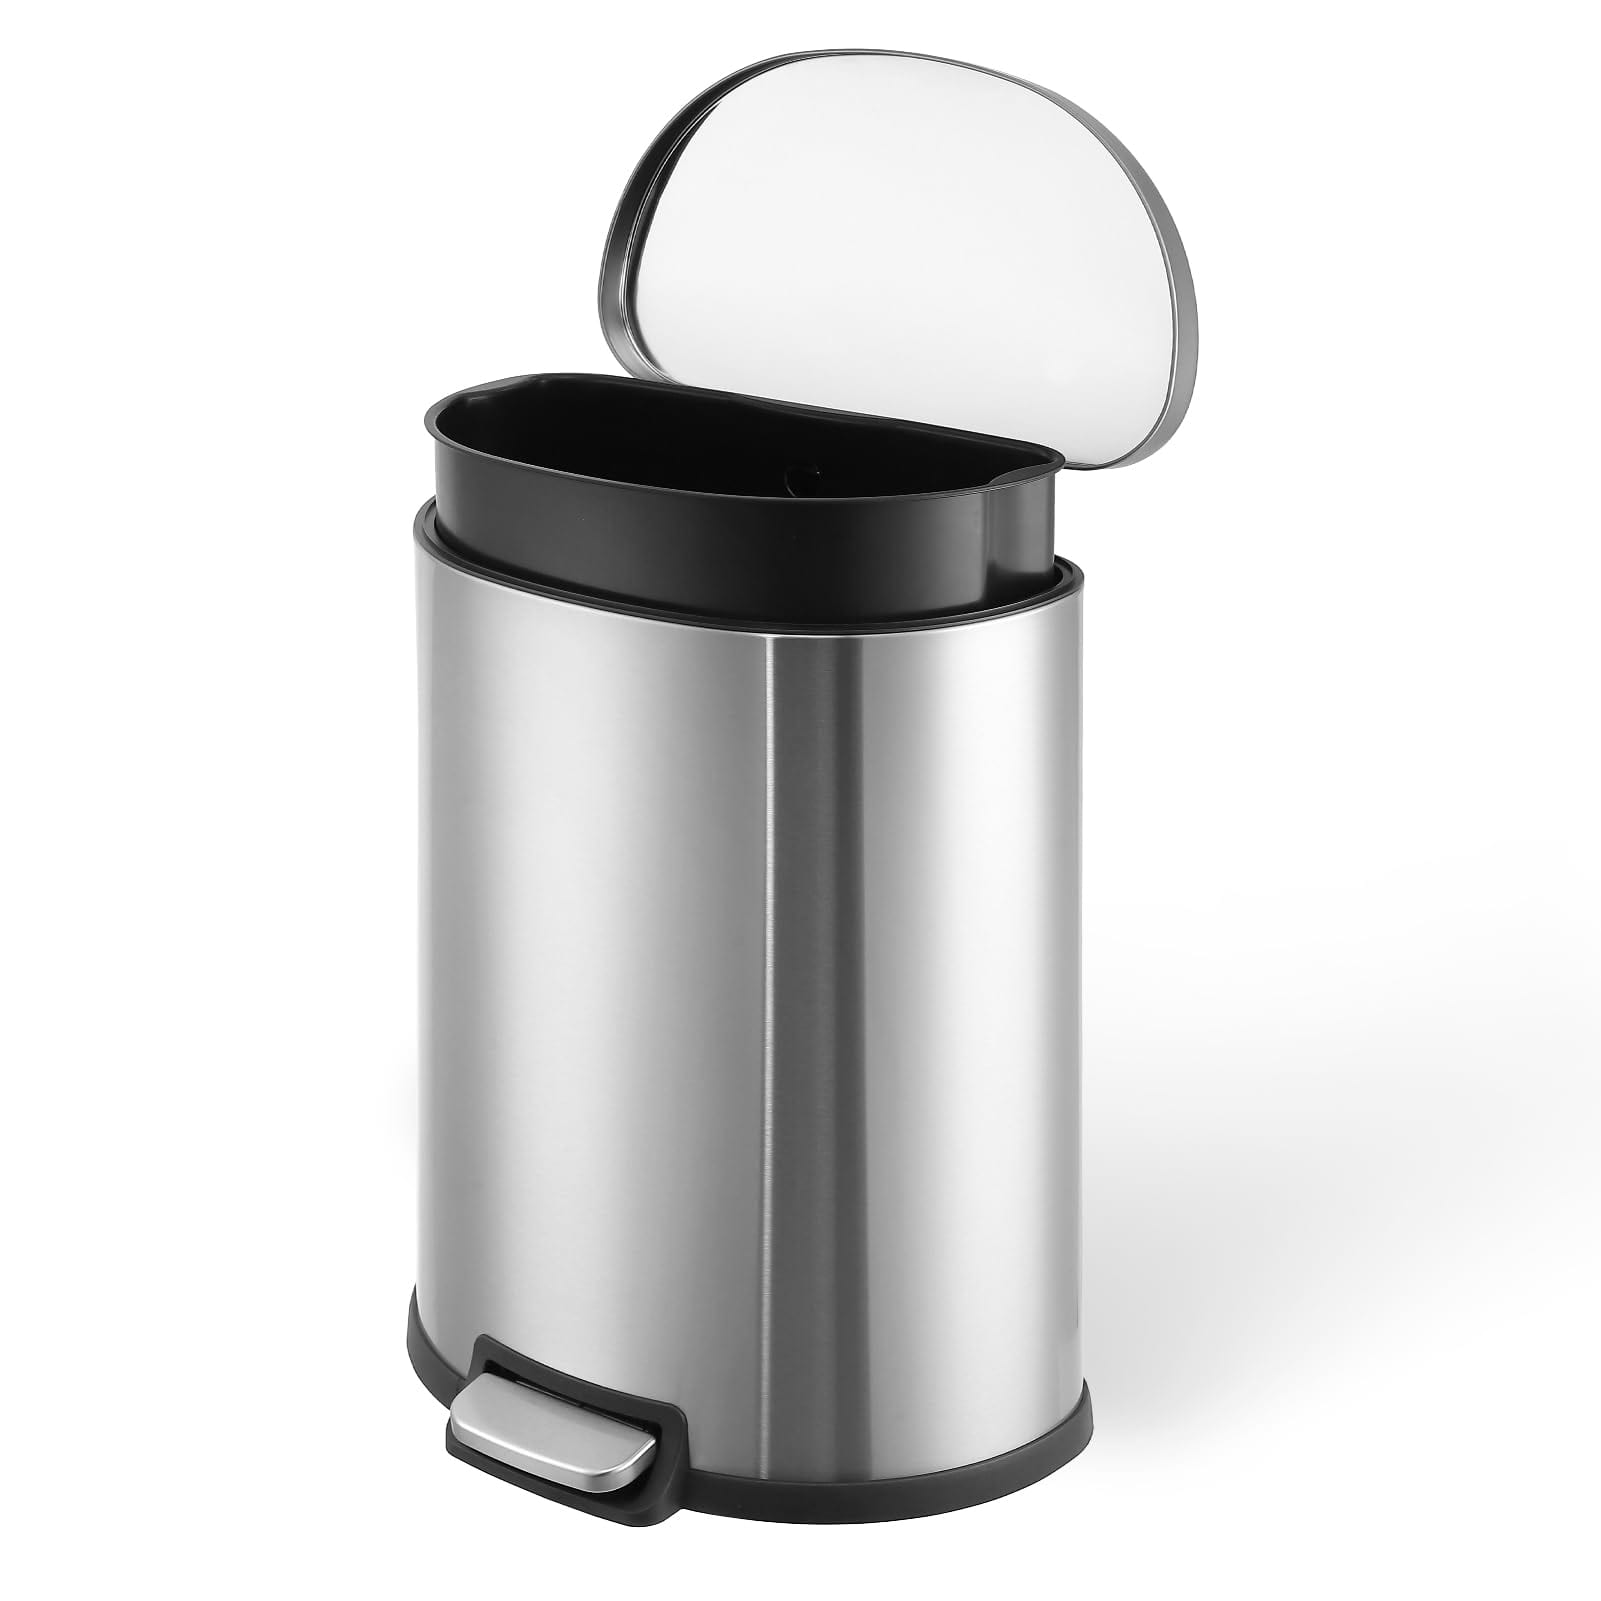 50L Semi-Circular Steel Trash Can with Pedal & Lid